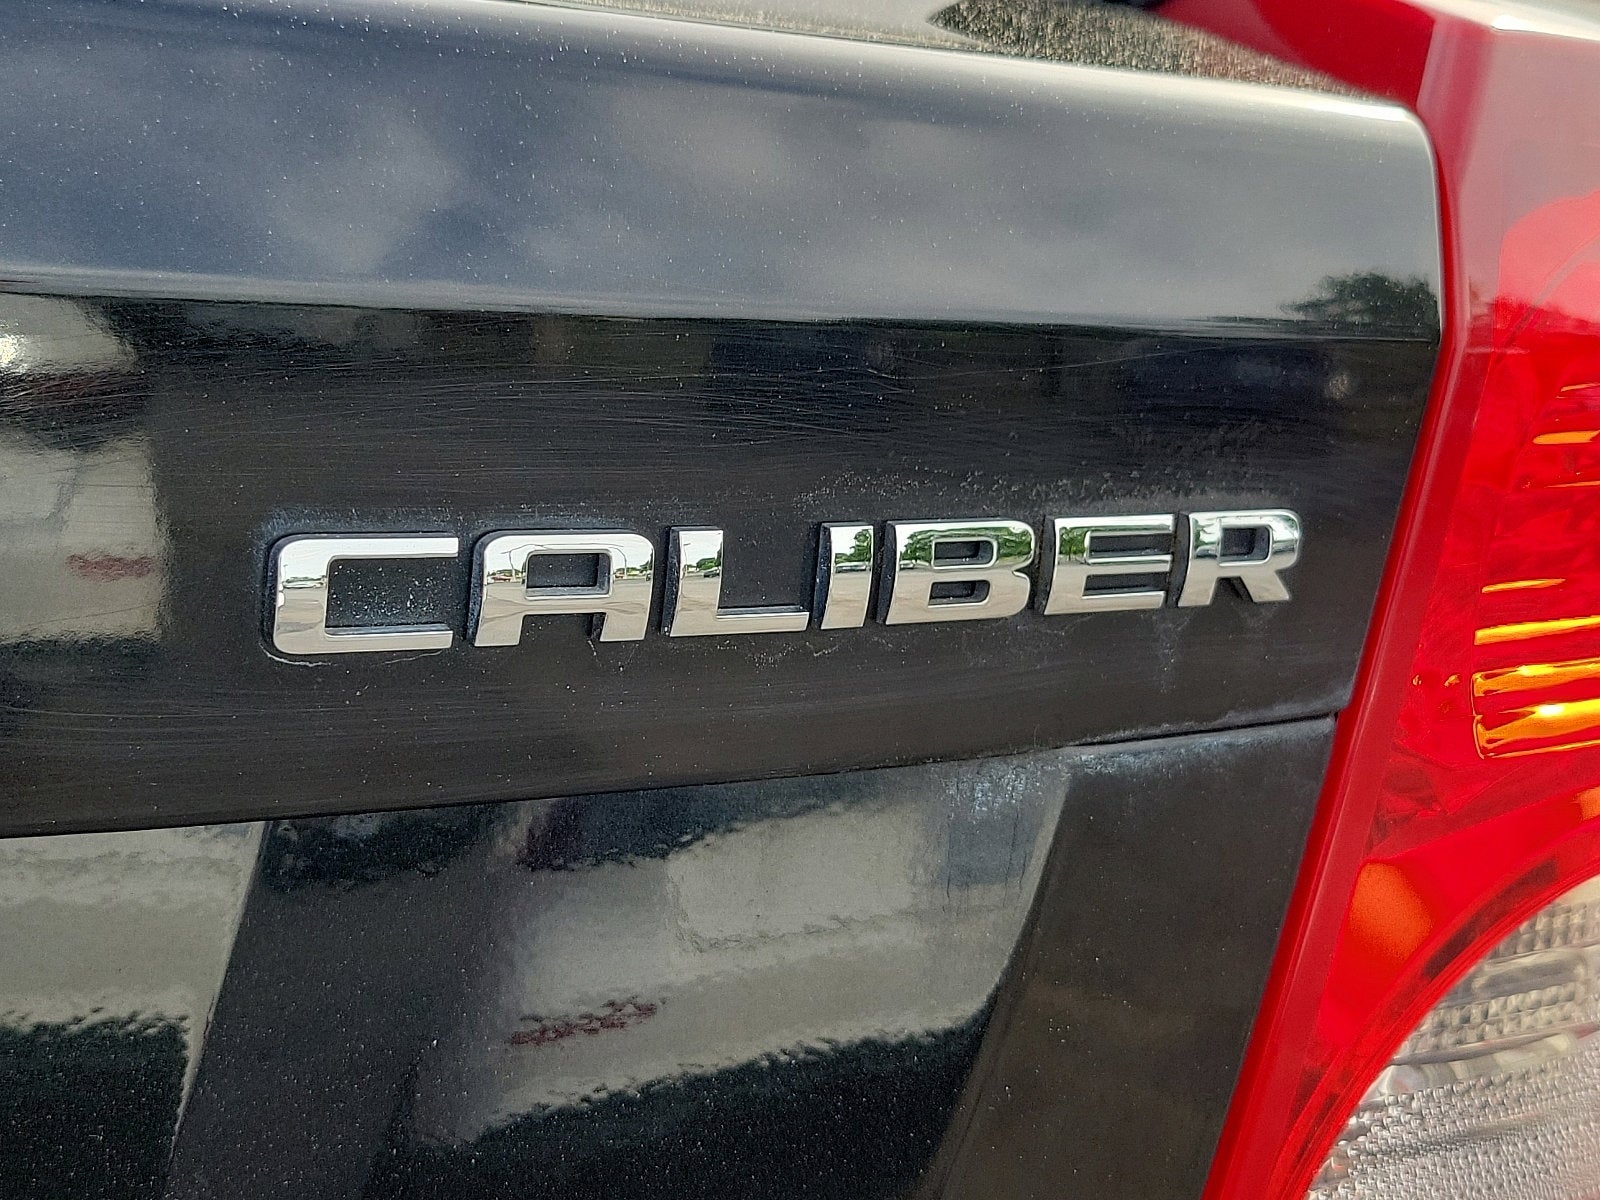 2010 Dodge Caliber SXT